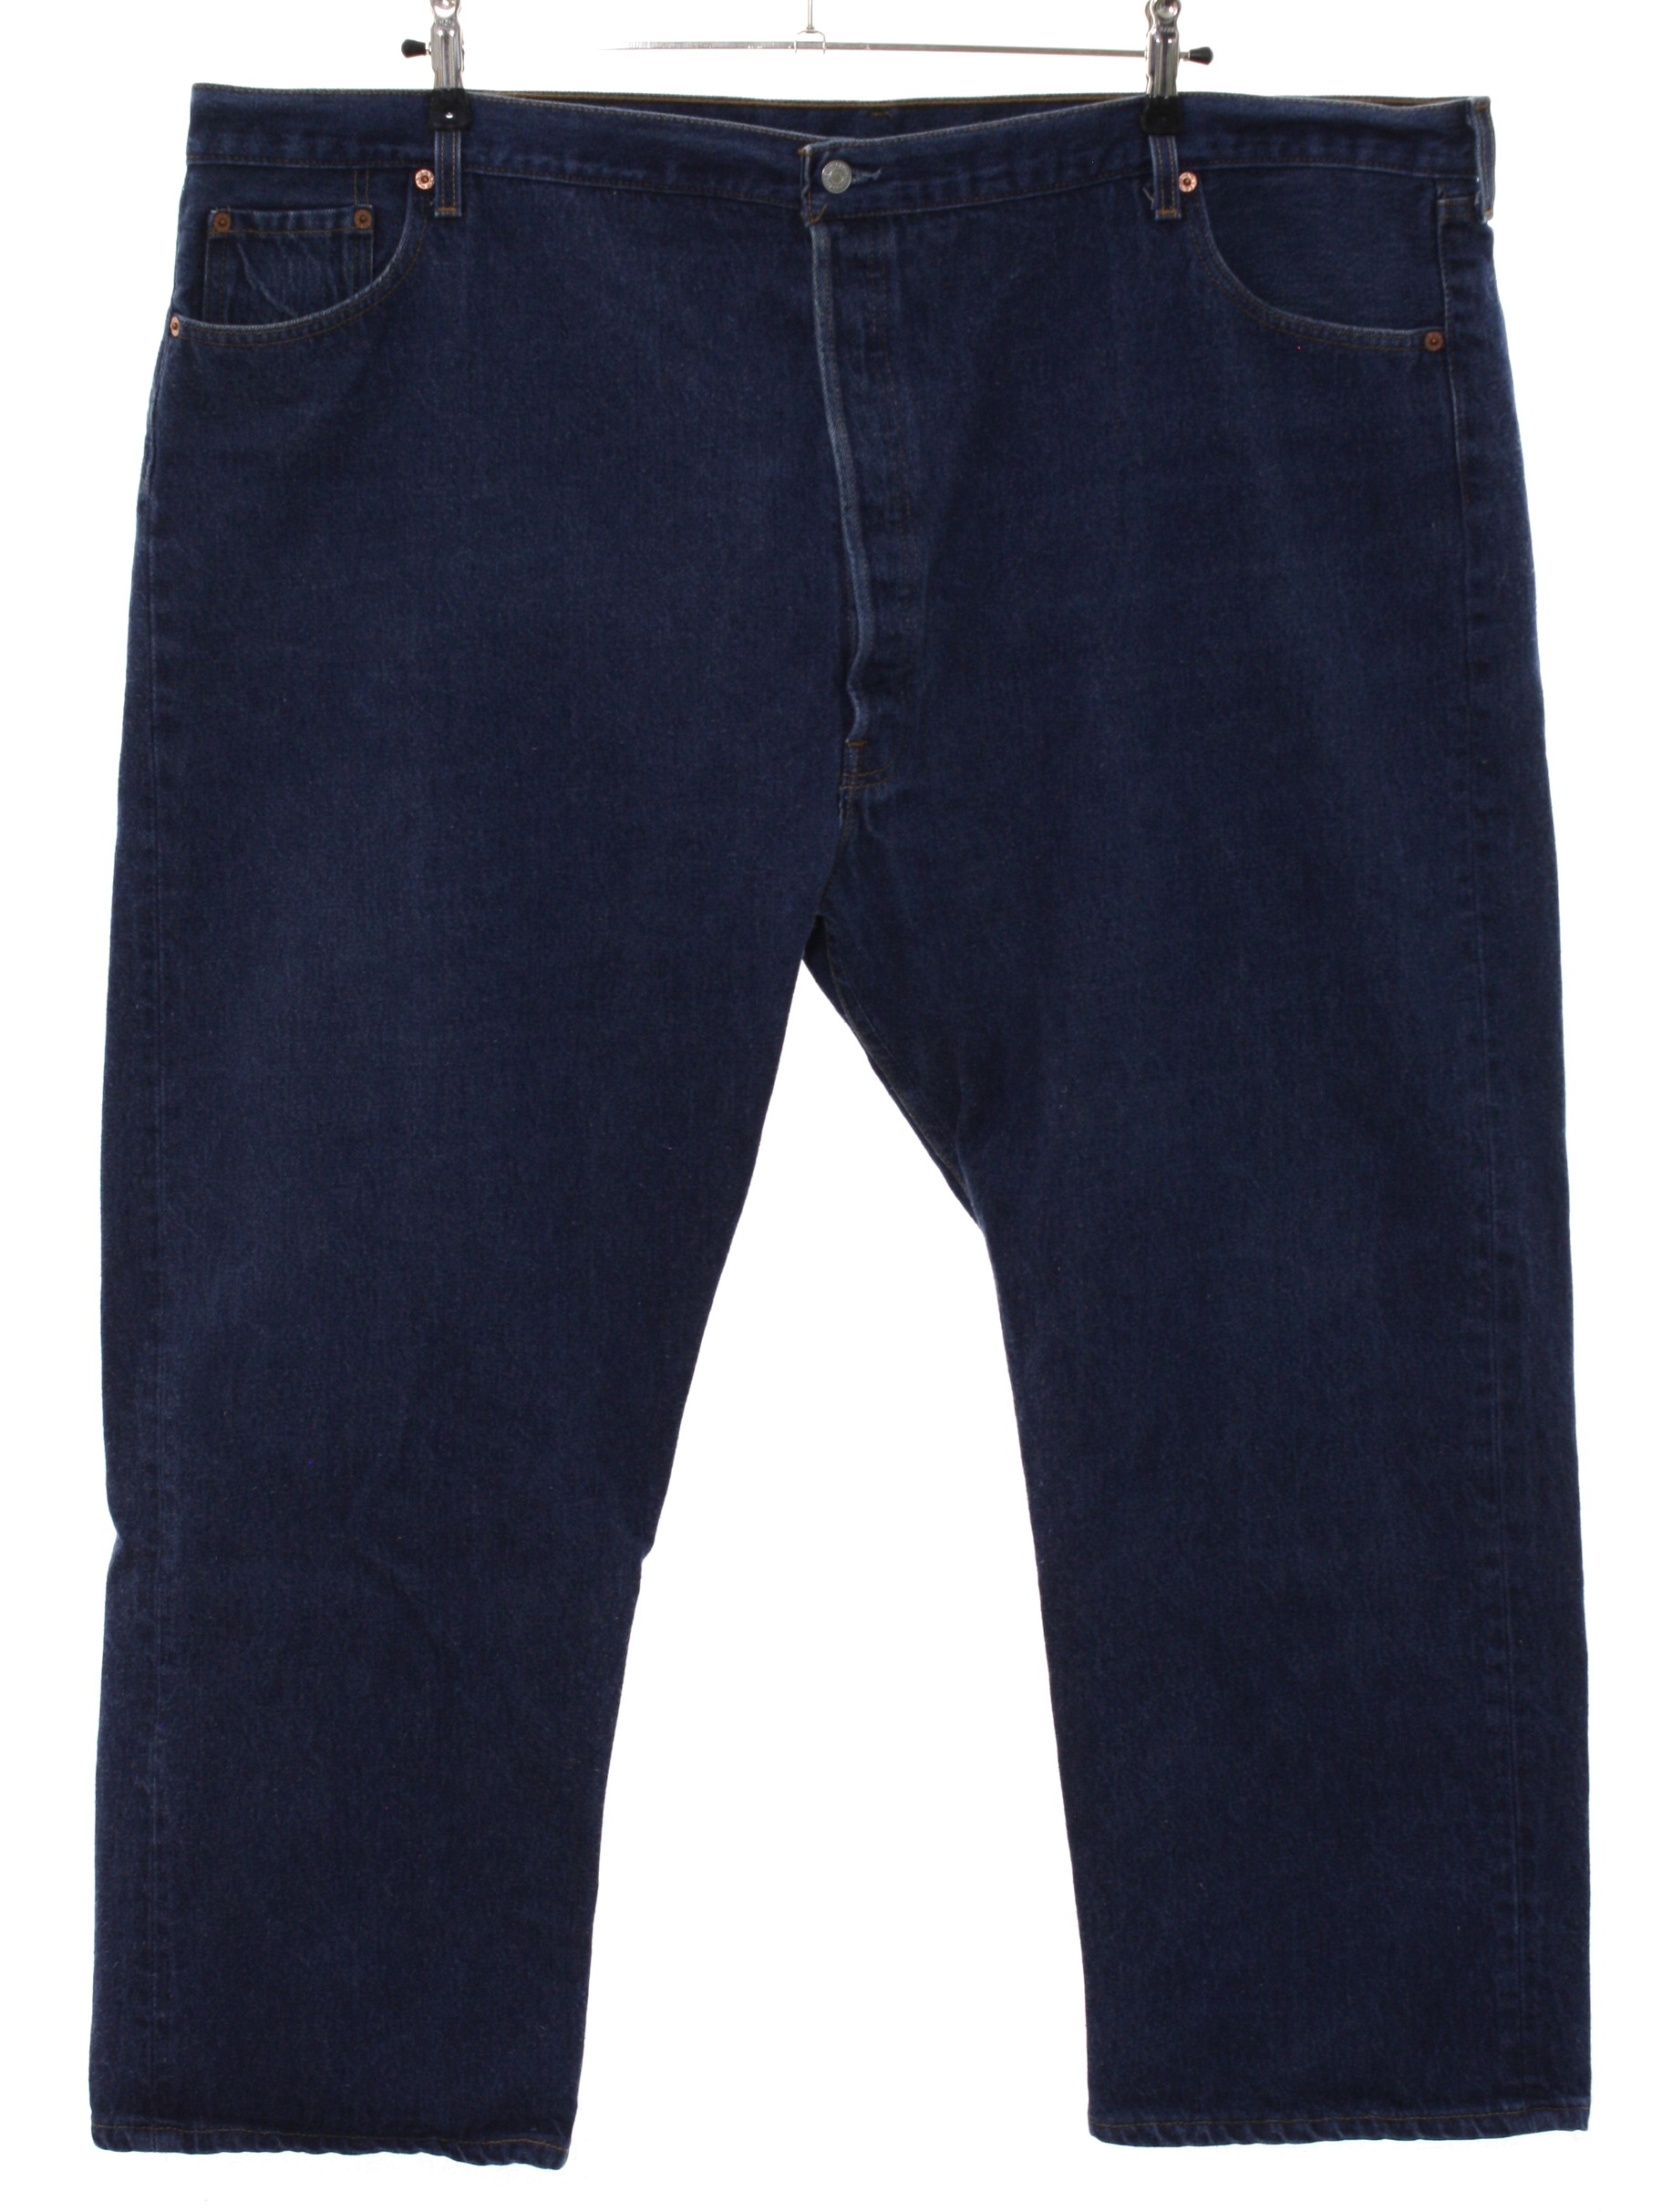 501 dark blue denim jeans